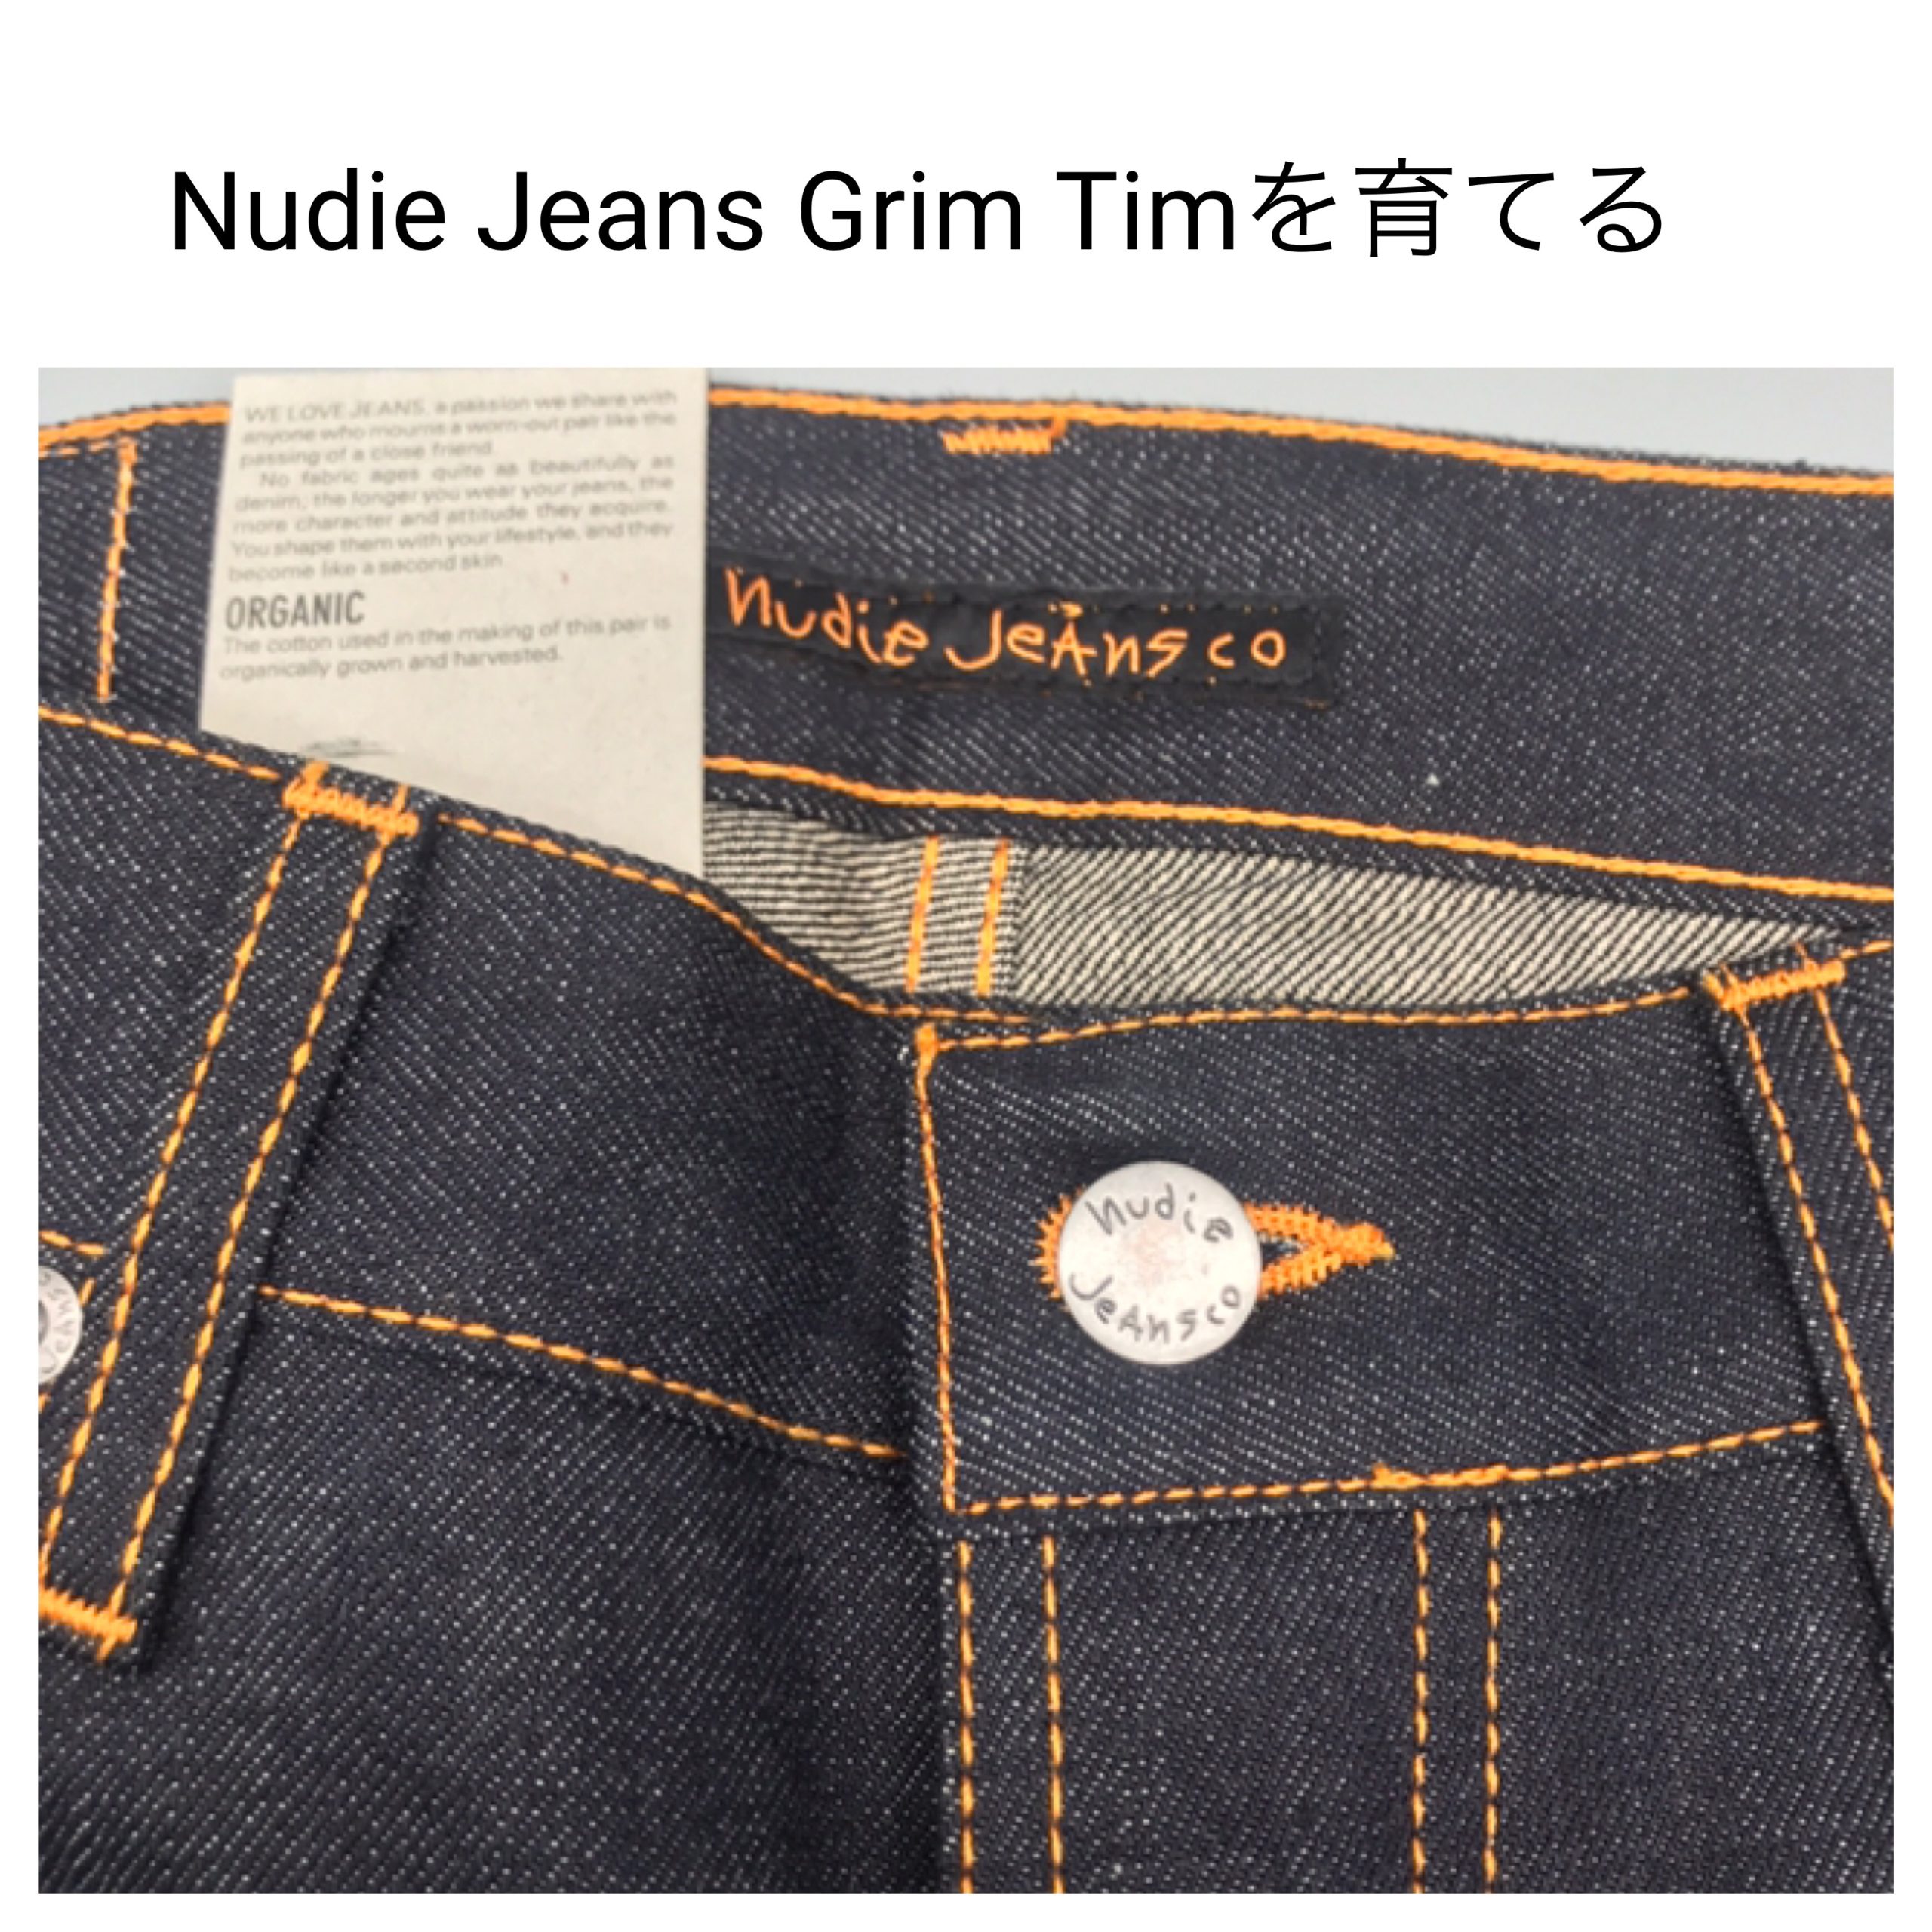 Nudie Jeans Grim Timを購入して育てることに Lab